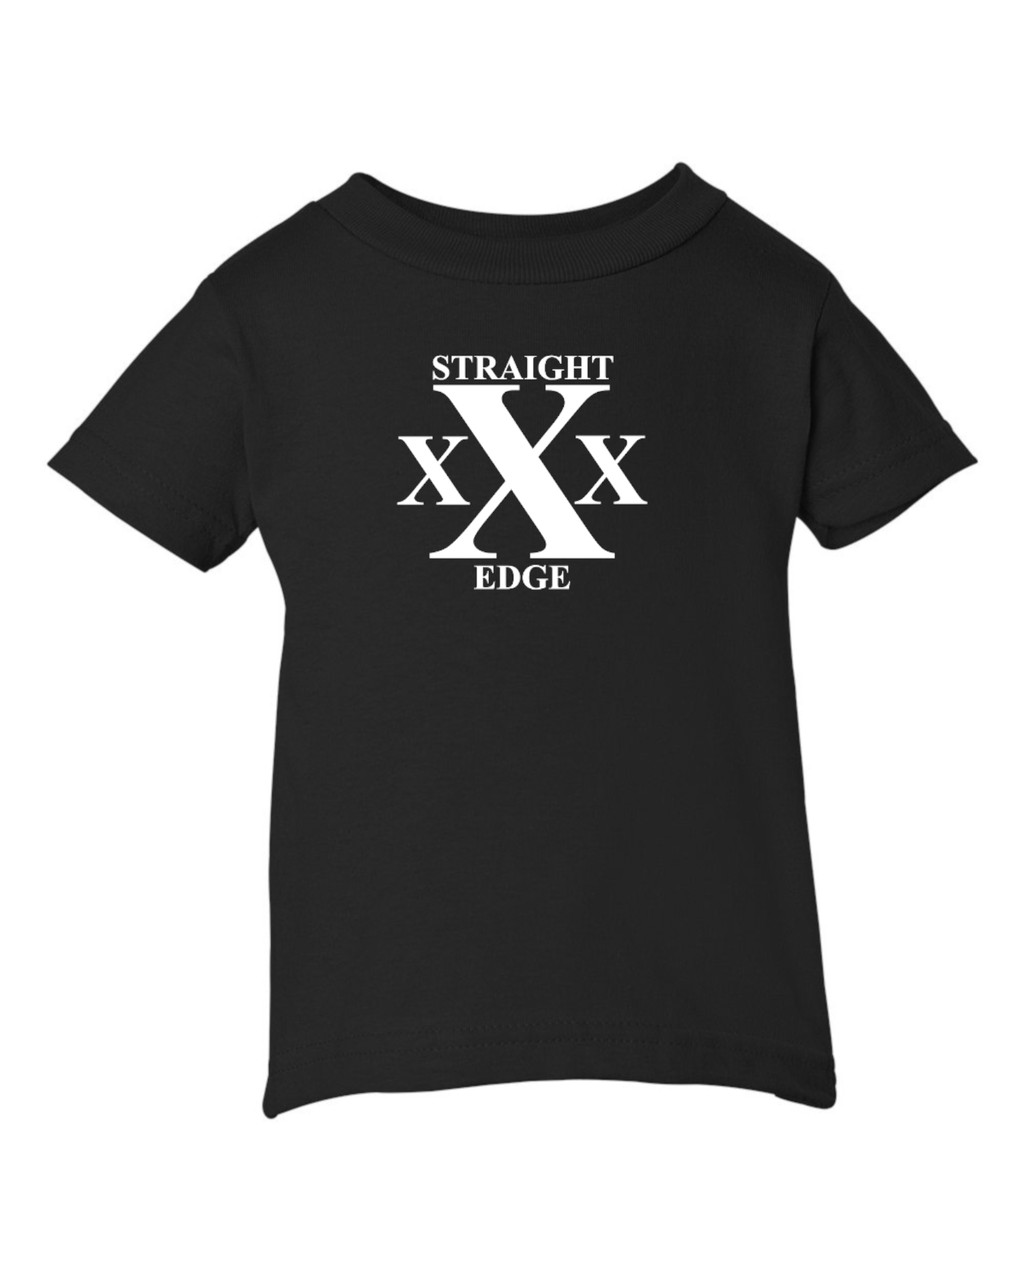 Hardcore Punk Rock Black Tee Straight Edge Baby & Toddler T-Shirt